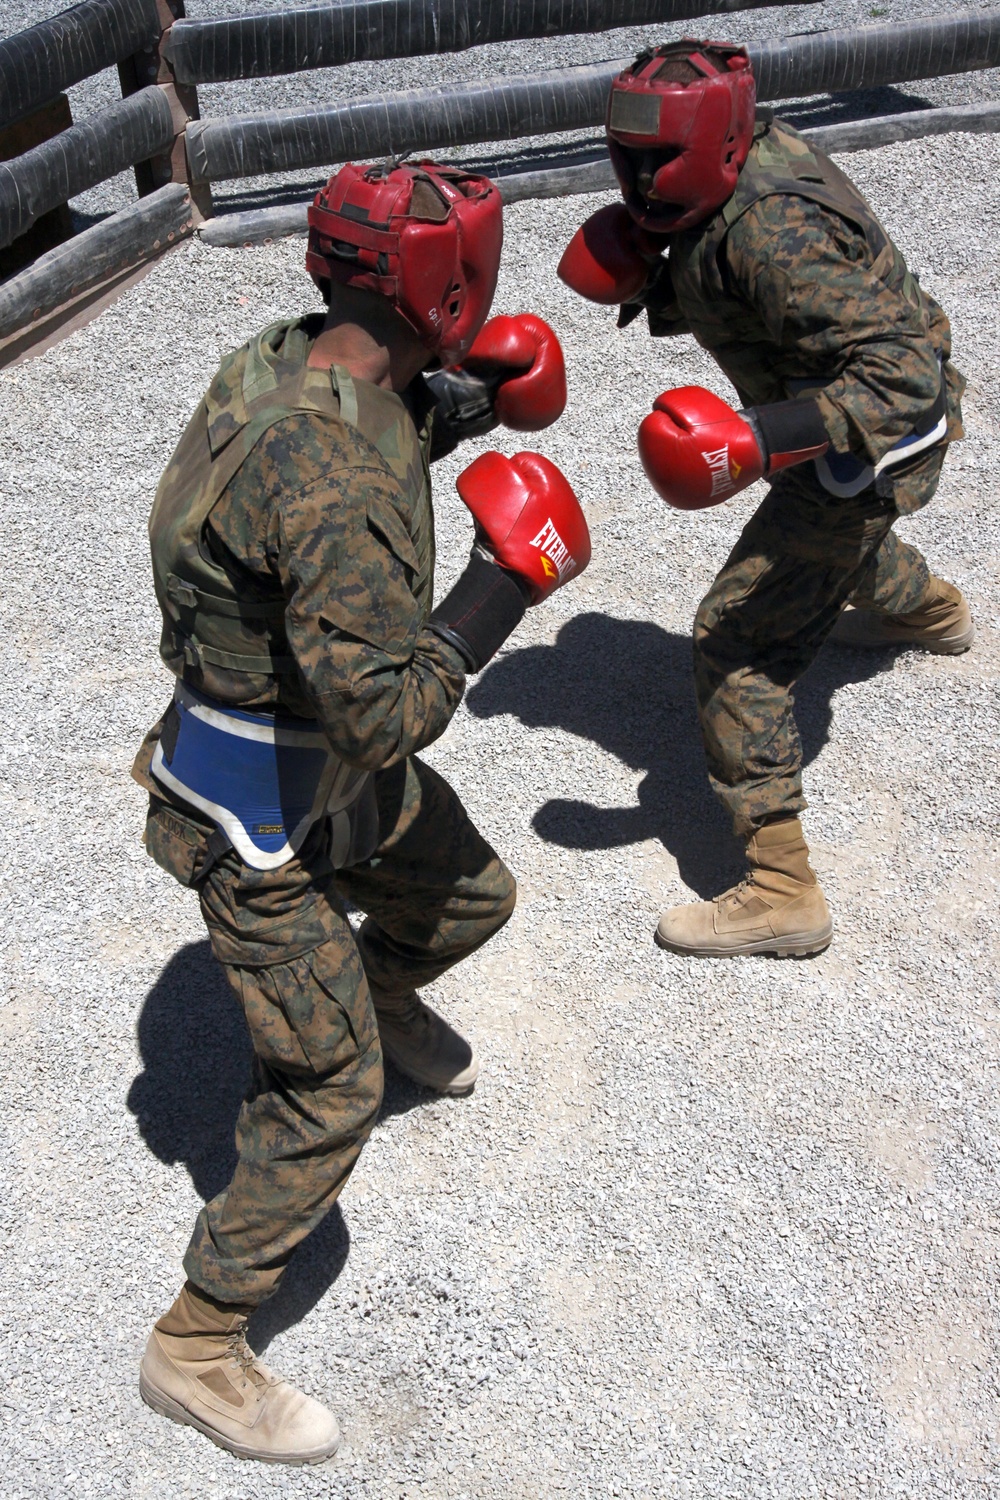 Recruits train in hand-to-hand combat